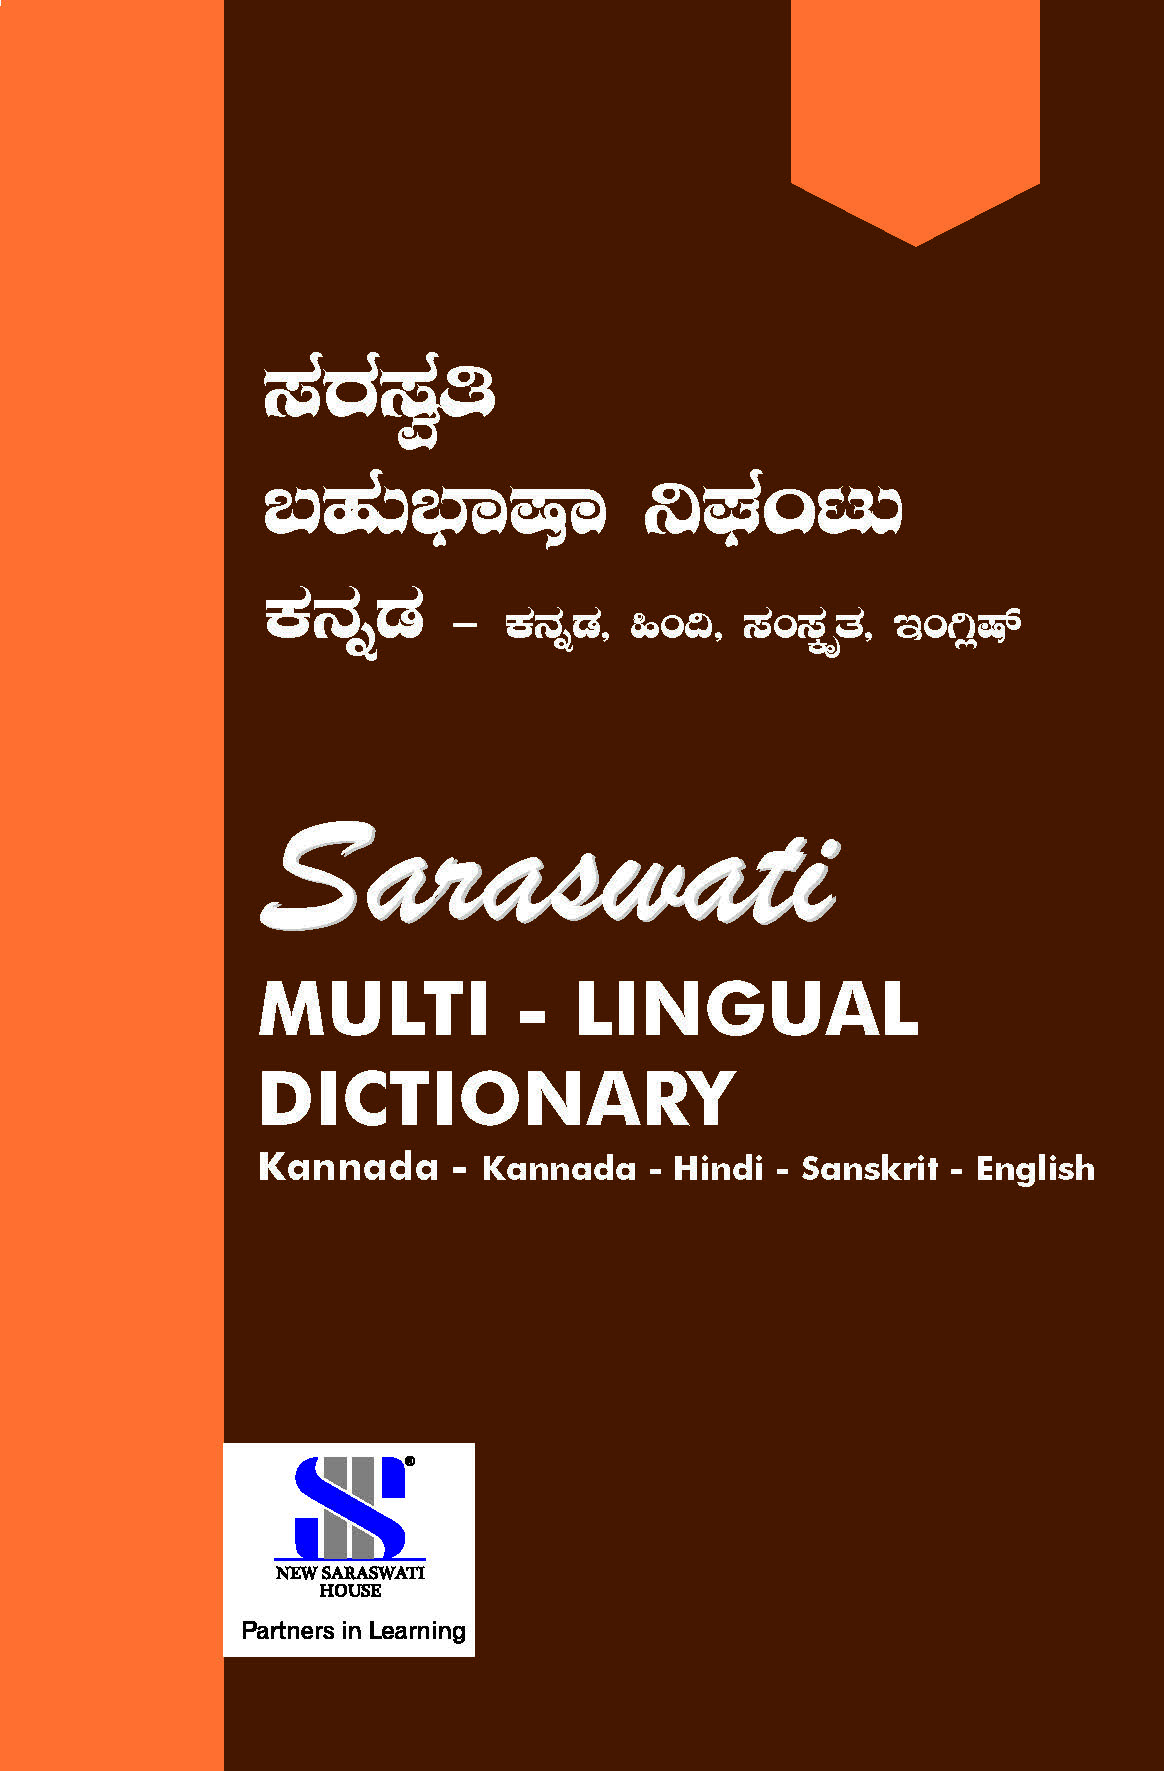 Saraswati Multi-Lingual Dictionary